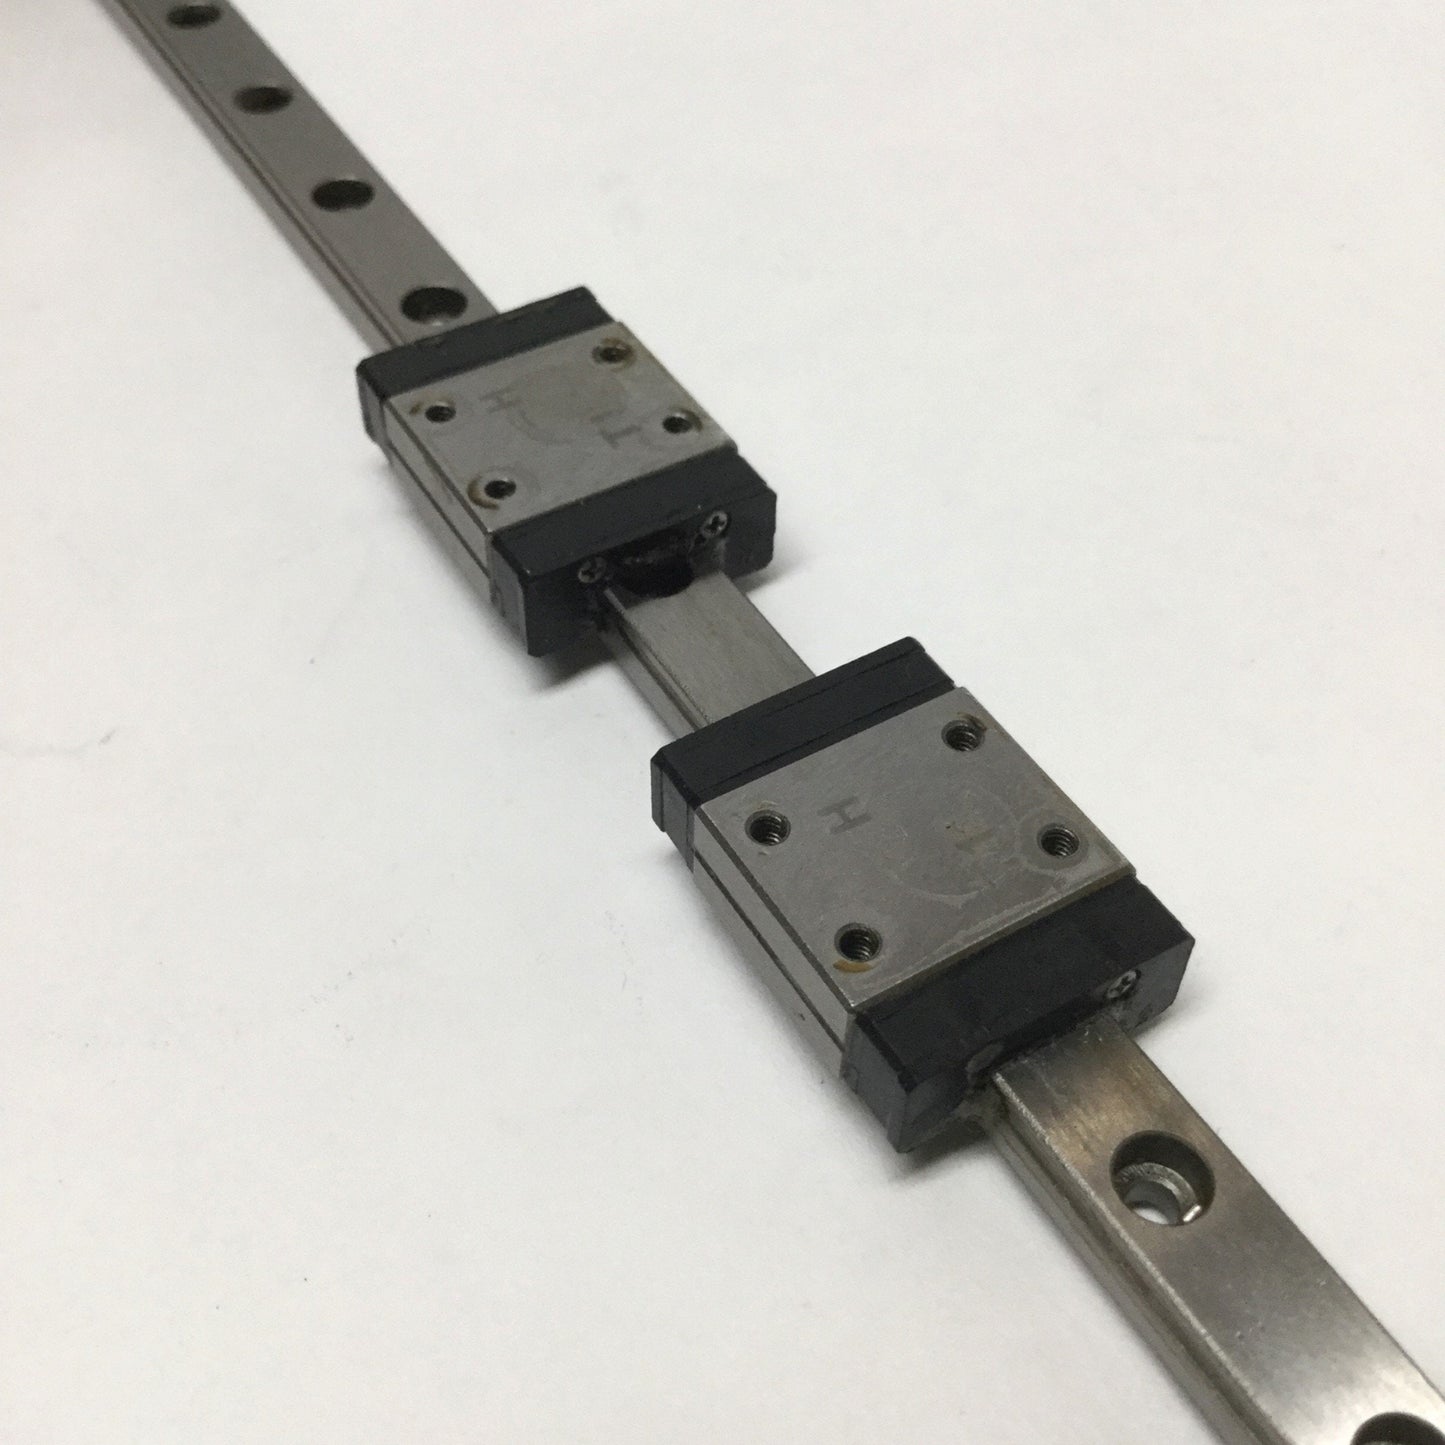 Used IKO LWL7 Linear Ball Bearing Slide Carriage Blocks (x2) on 240mm Guide Rail